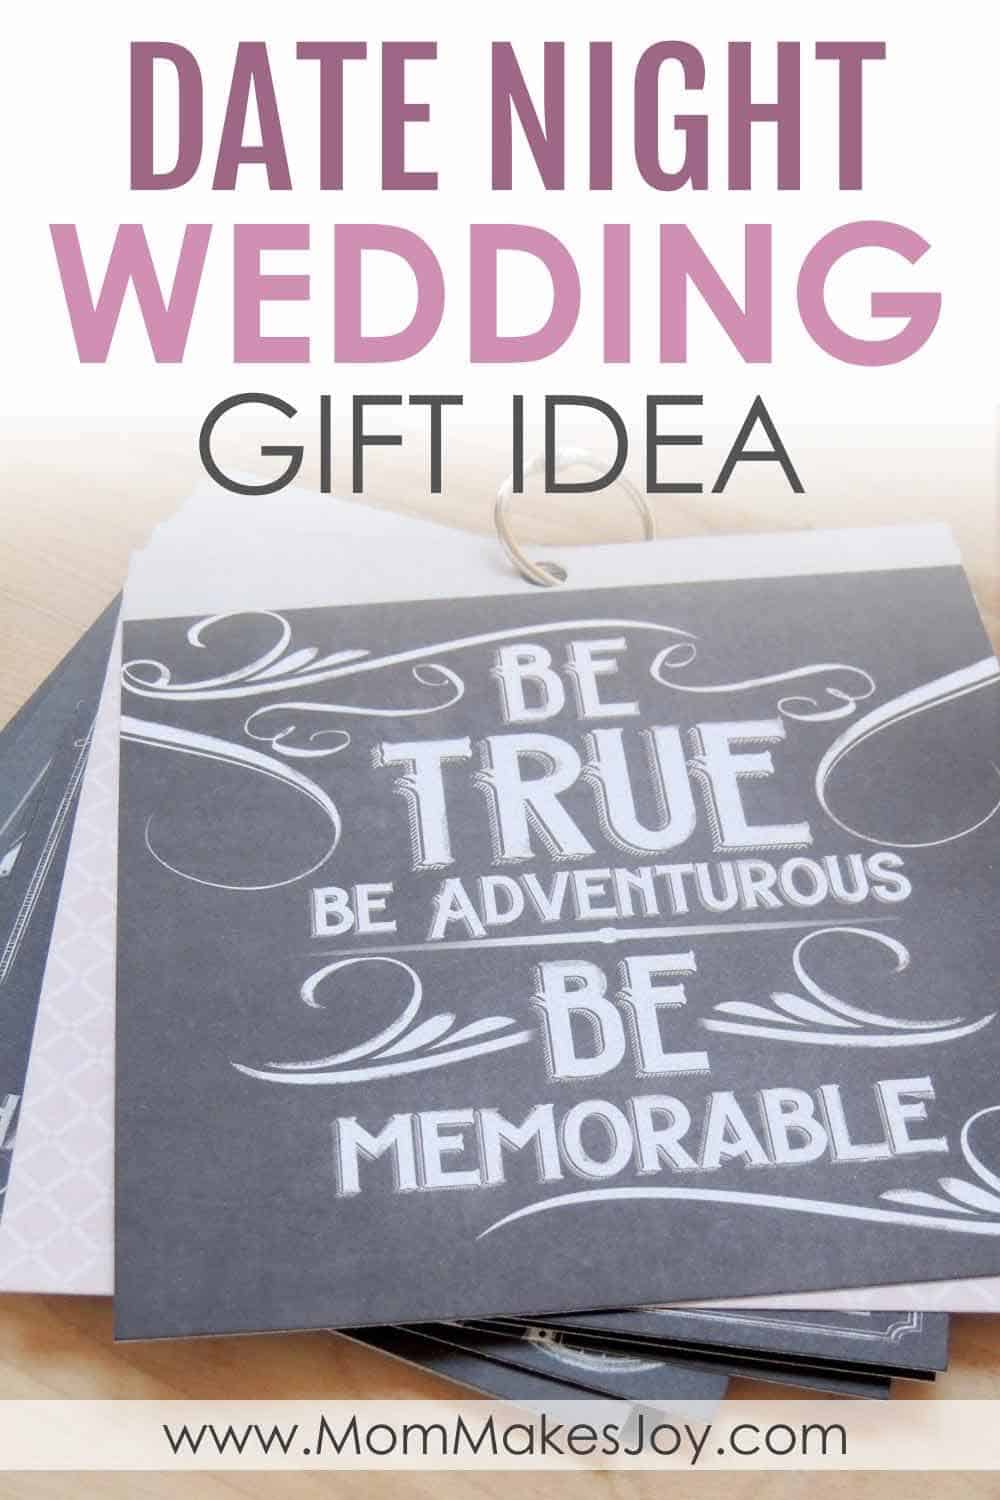 Date Night Wedding Gift Idea